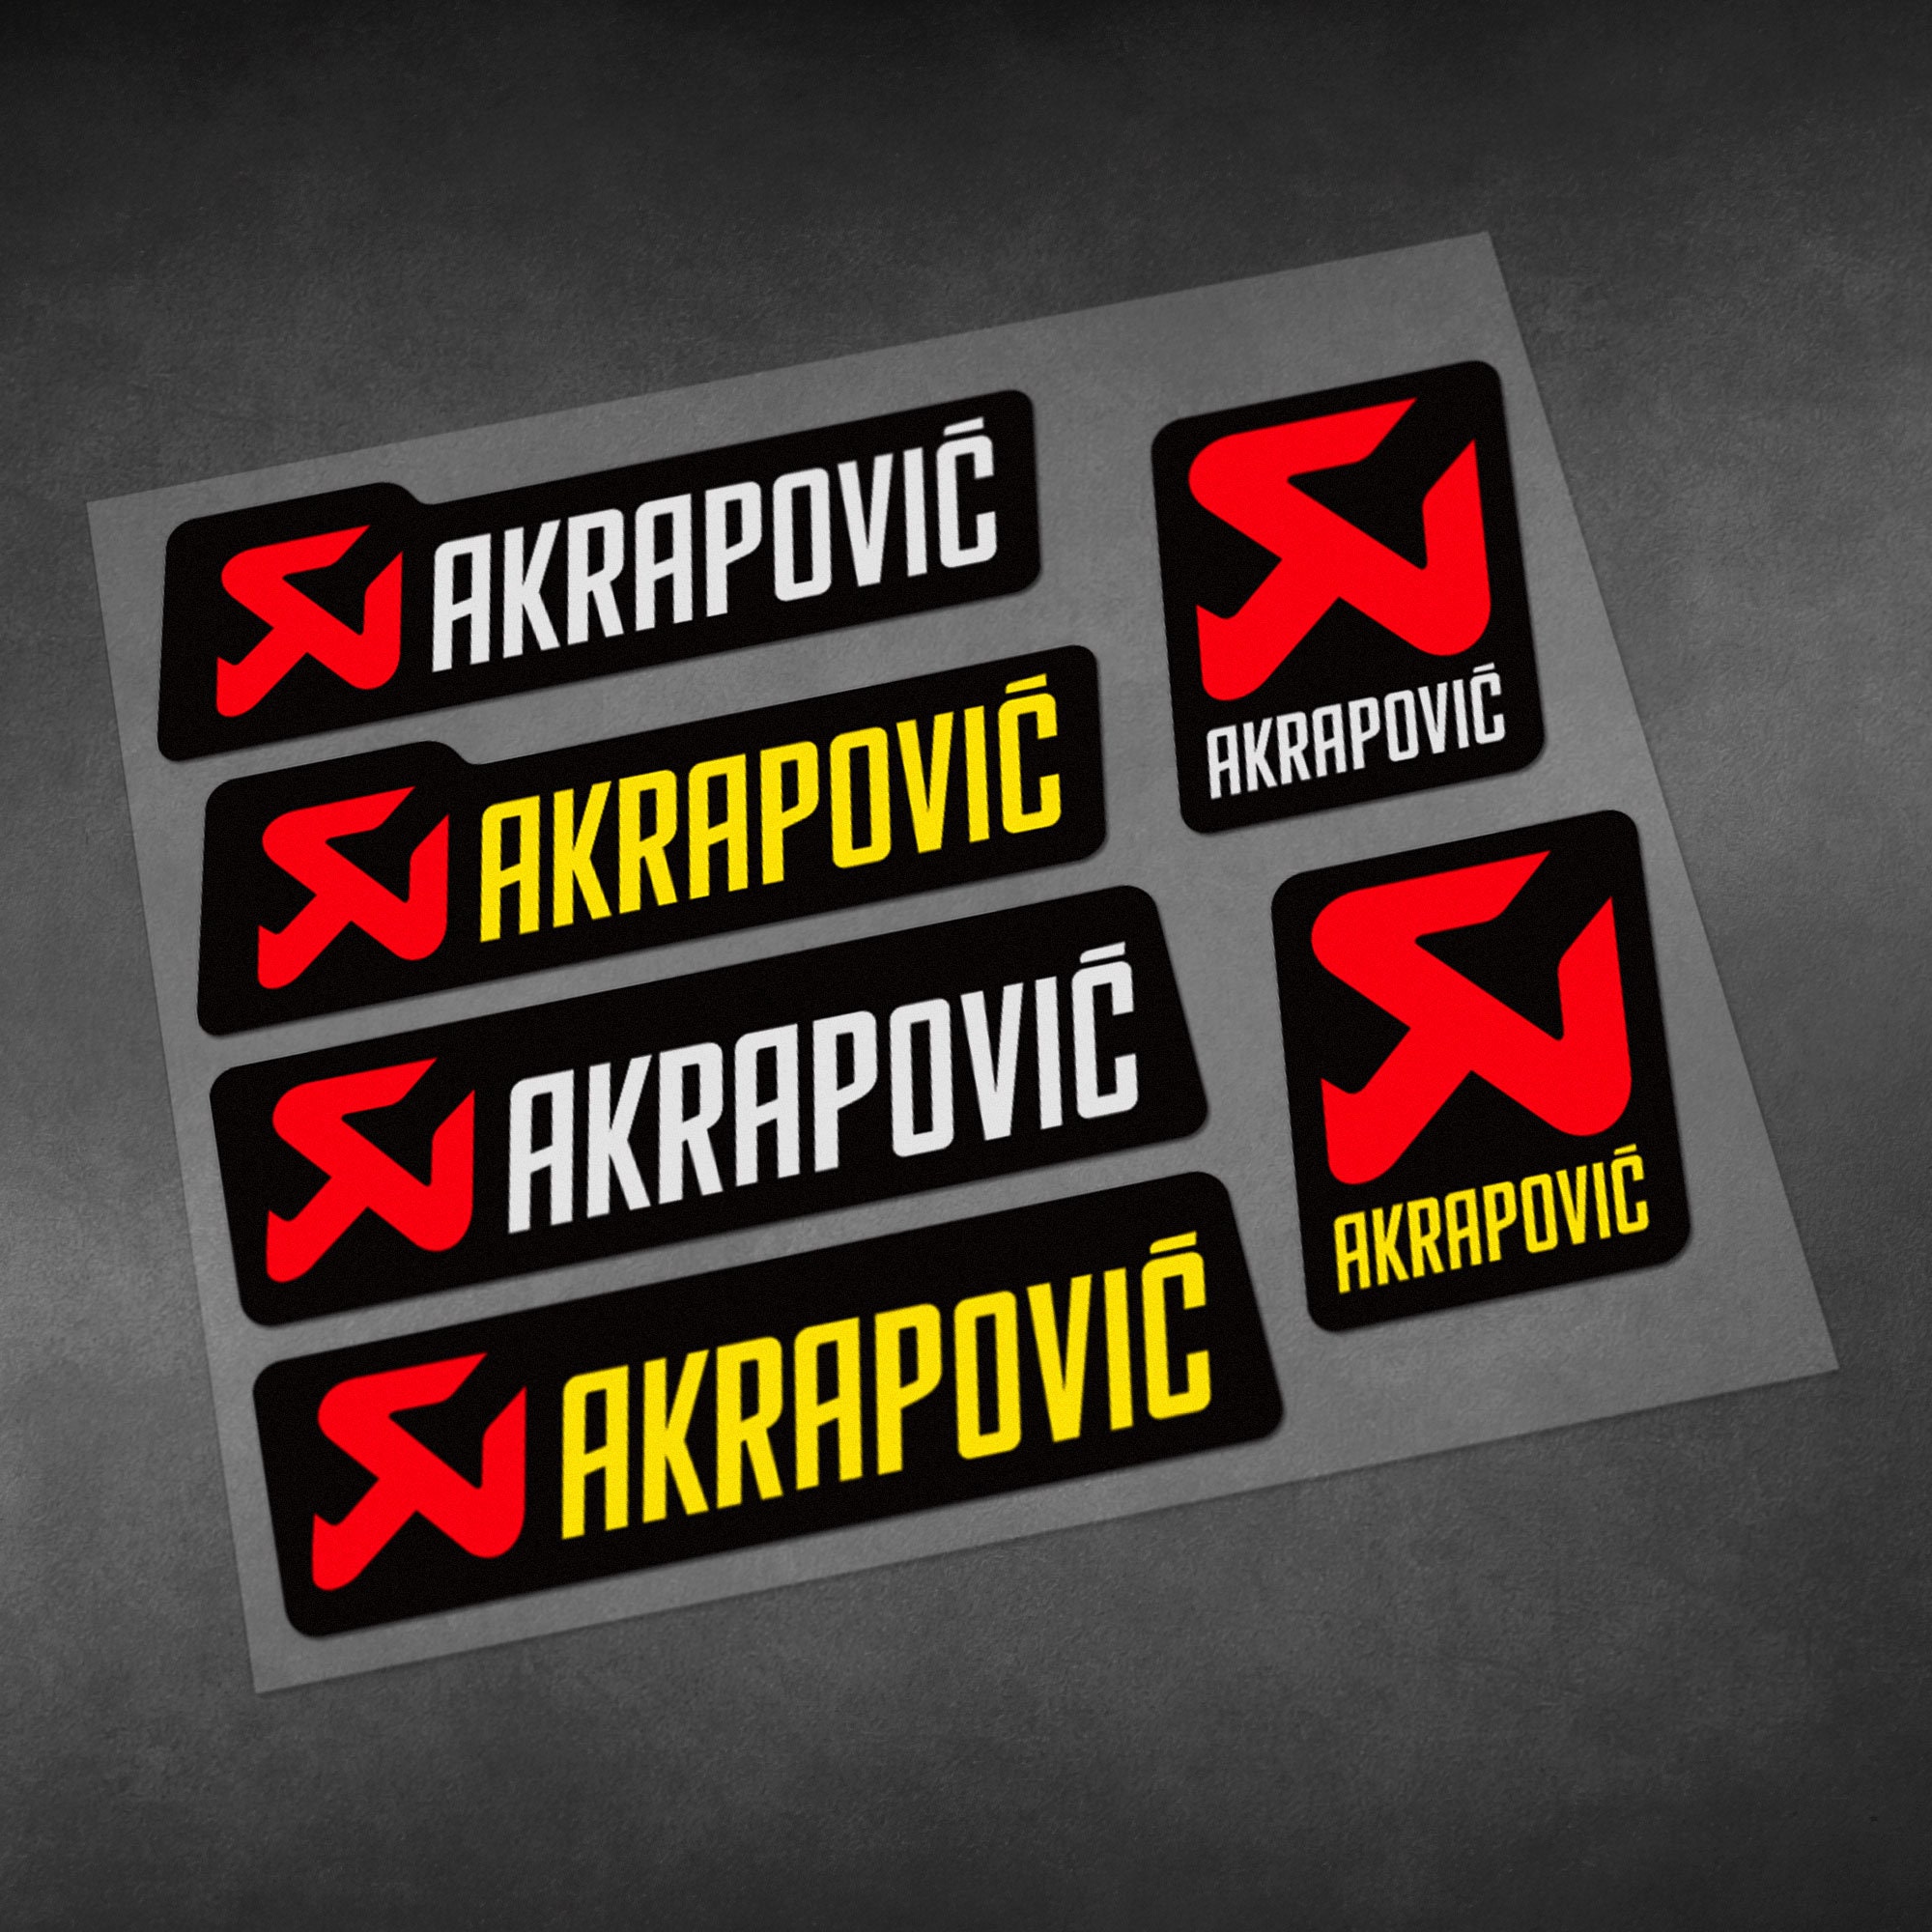 Buy Akrapovic Stickers Online In India -  India